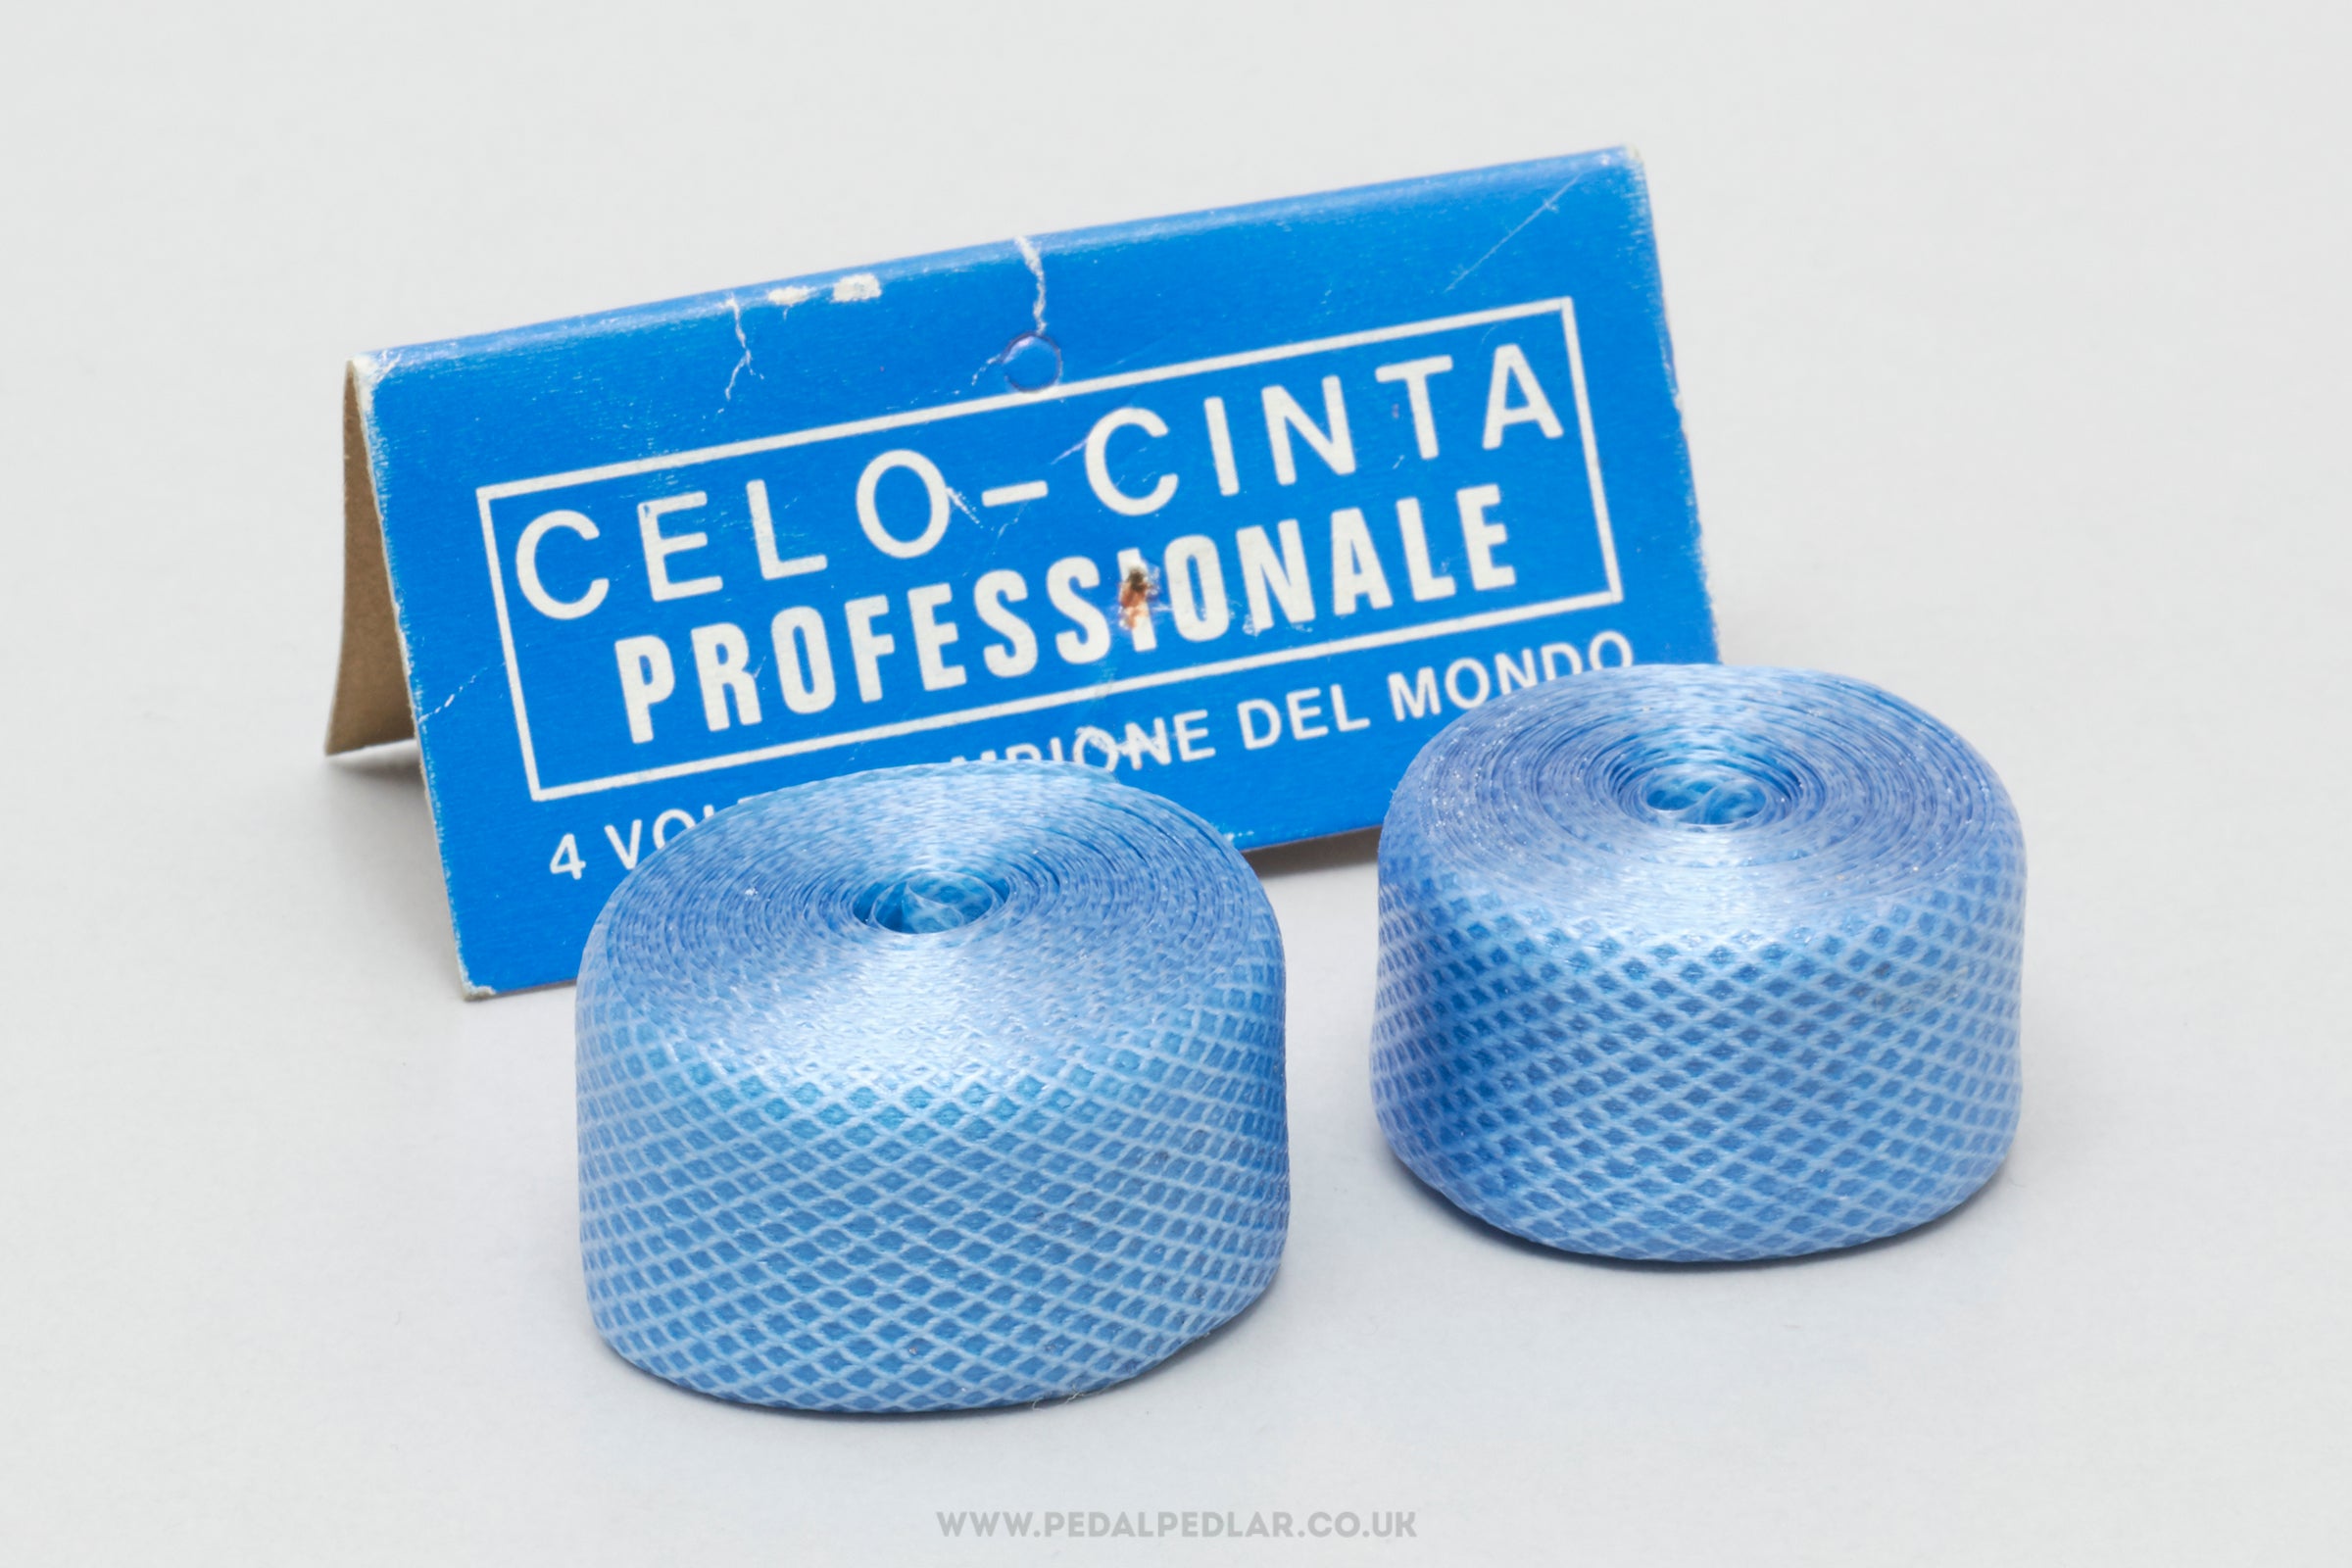 Celo-Cinta Professionale Benotto Cello Type NOS/NIB Vintage Blue Textured Handlebar Tape - Pedal Pedlar - Buy New Old Stock Bike Parts